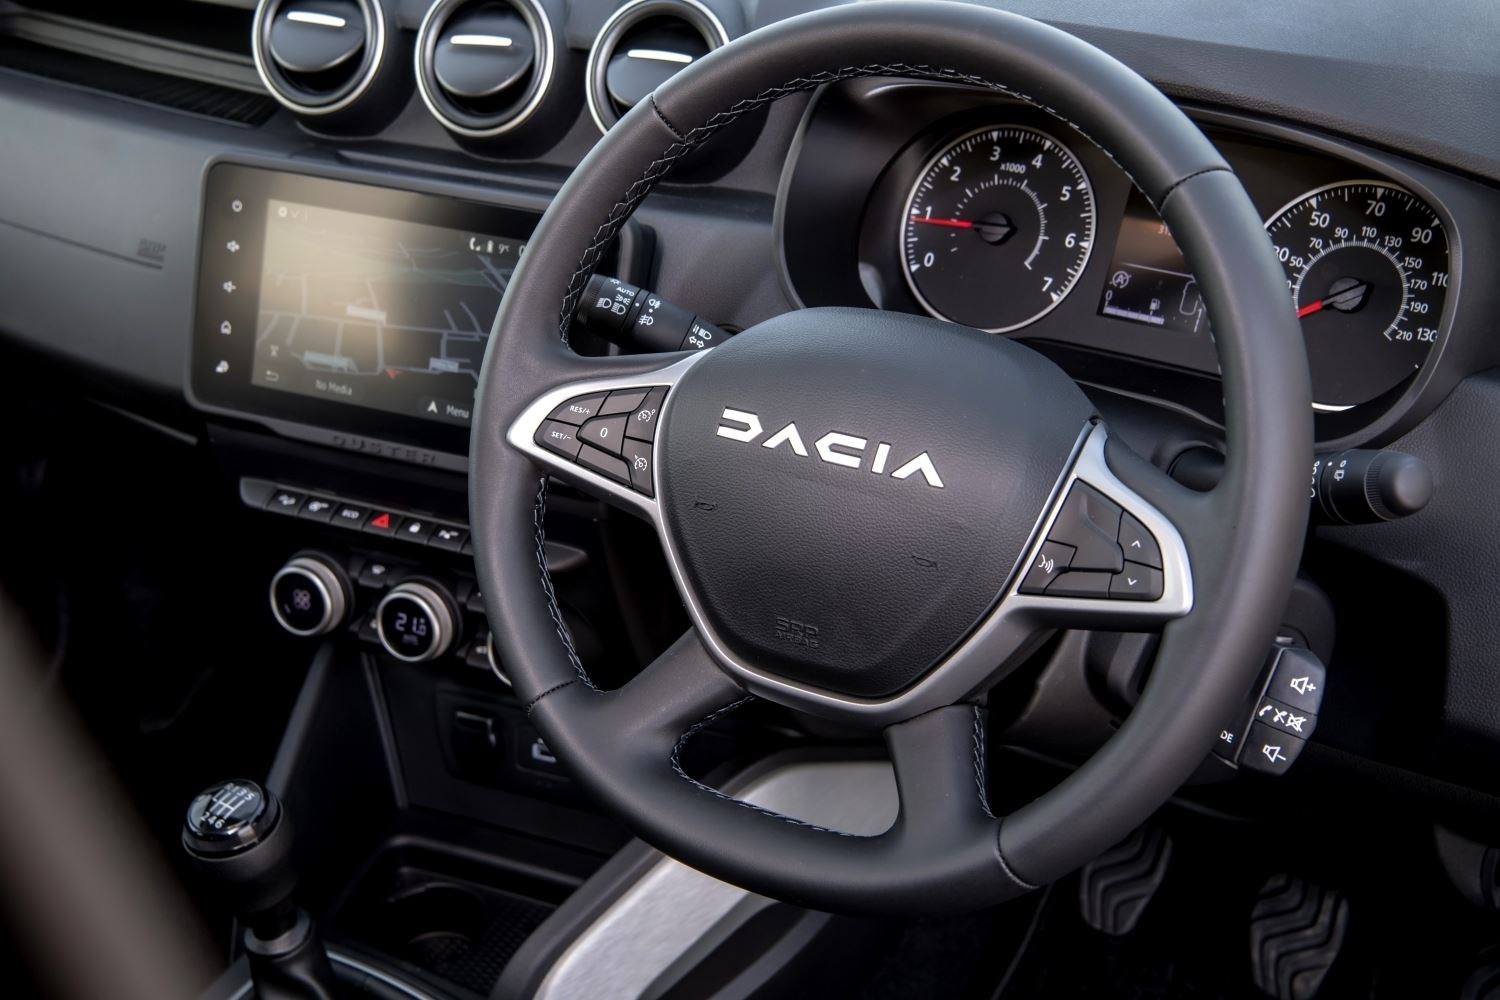 Dacia Duster.